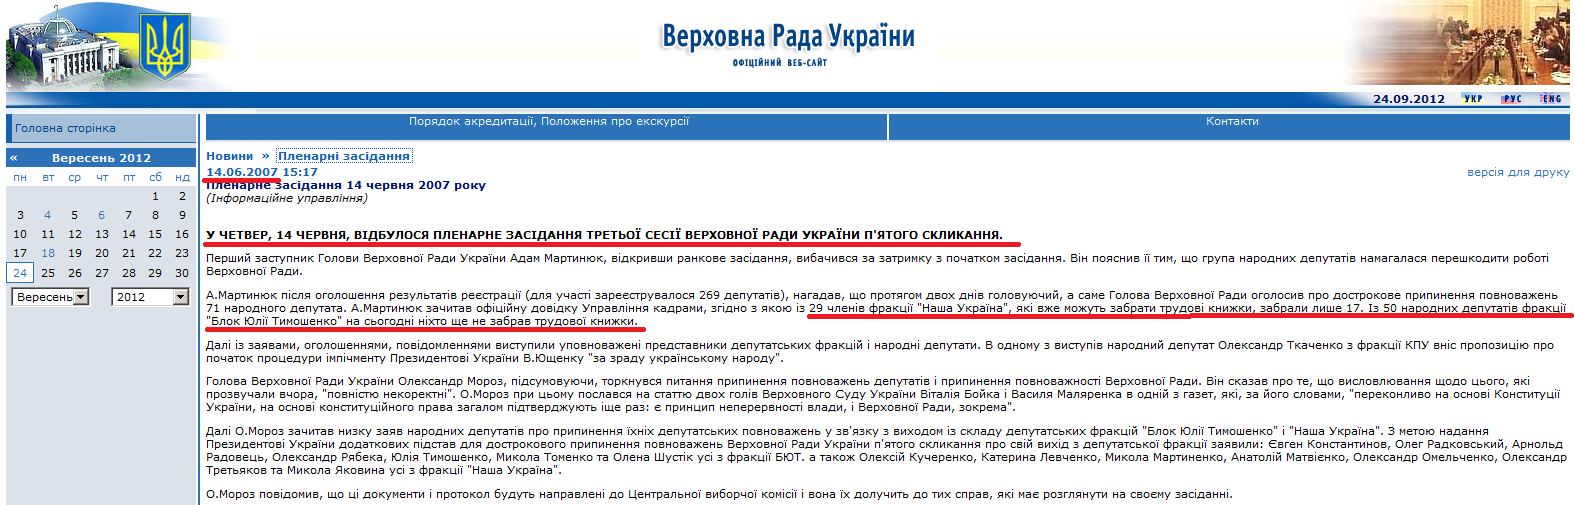 http://portal.rada.gov.ua/rada/control/uk/publish/article/news_left?art_id=95449&cat_id=33449